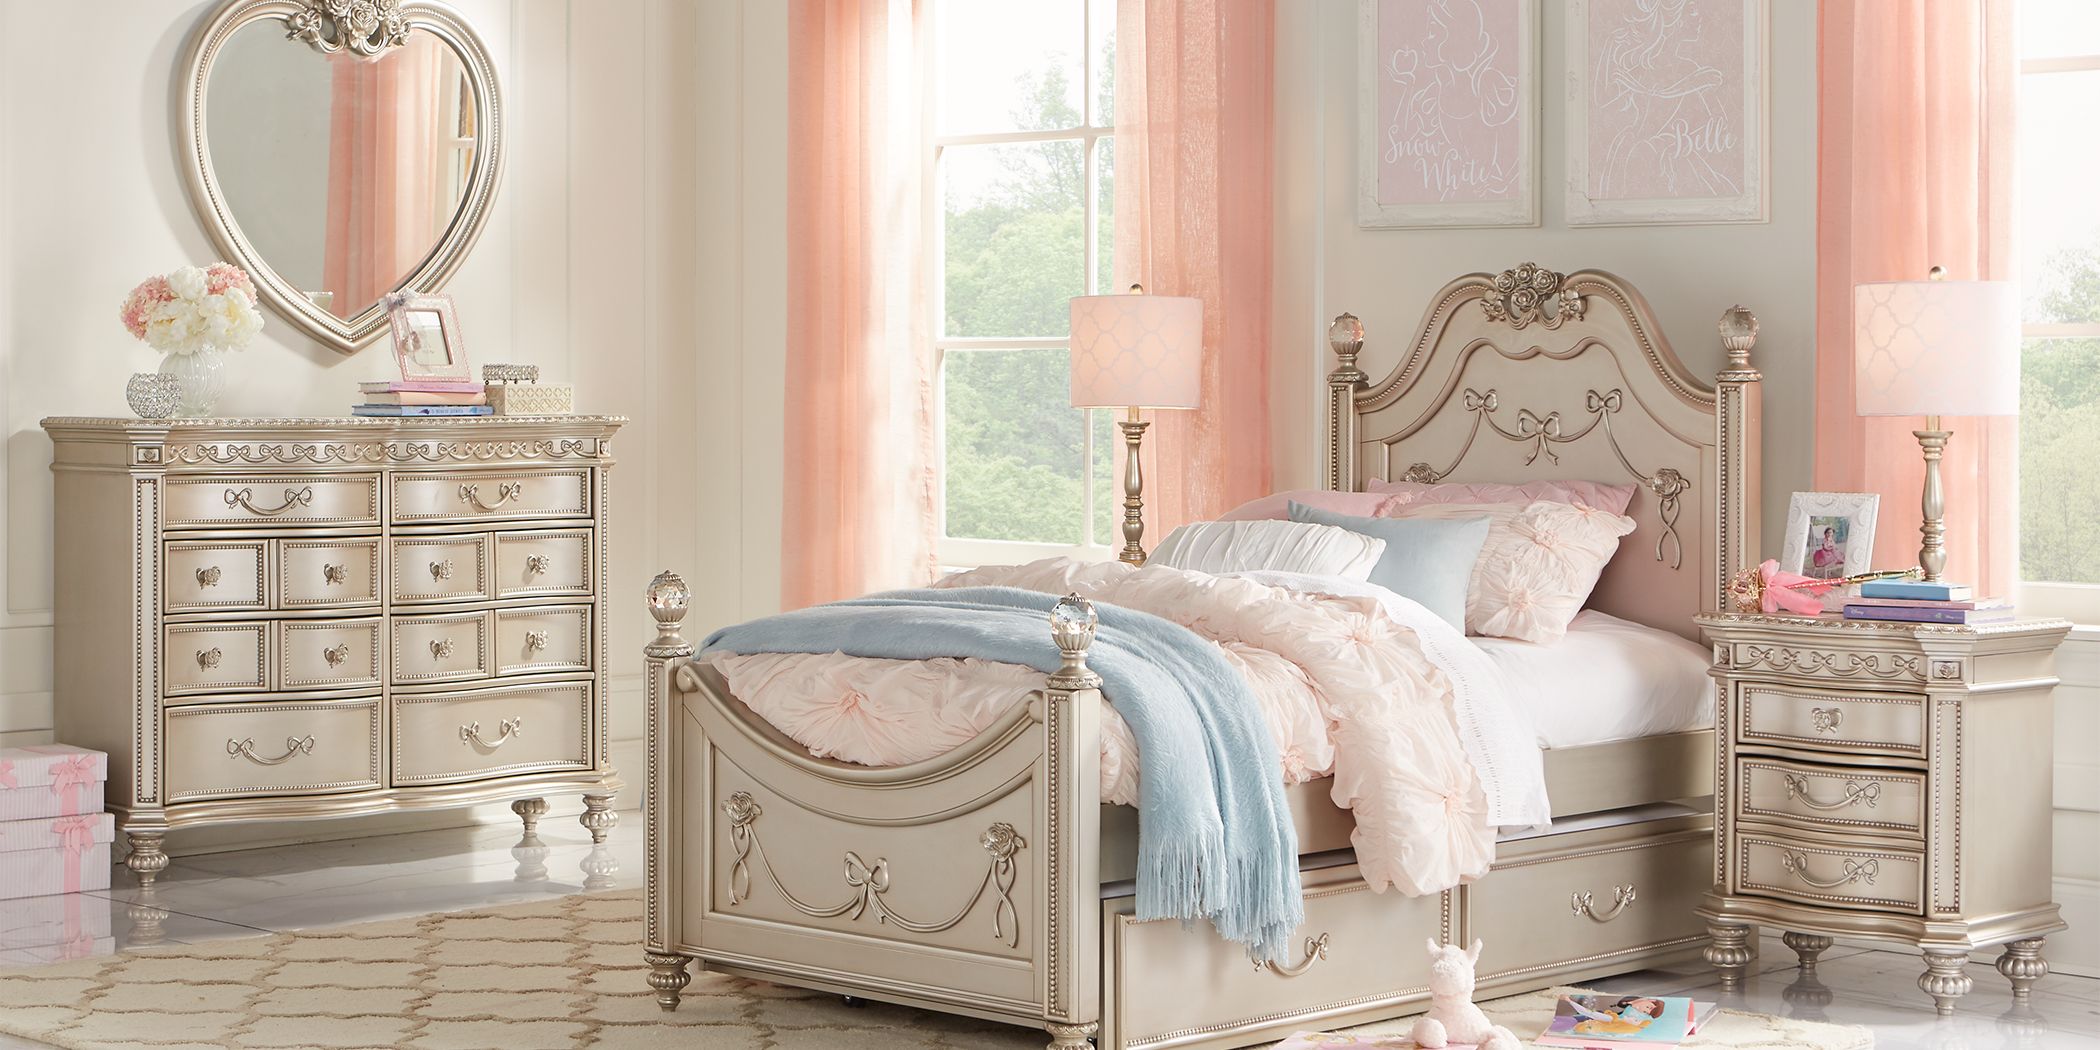 princess twin bedroom set